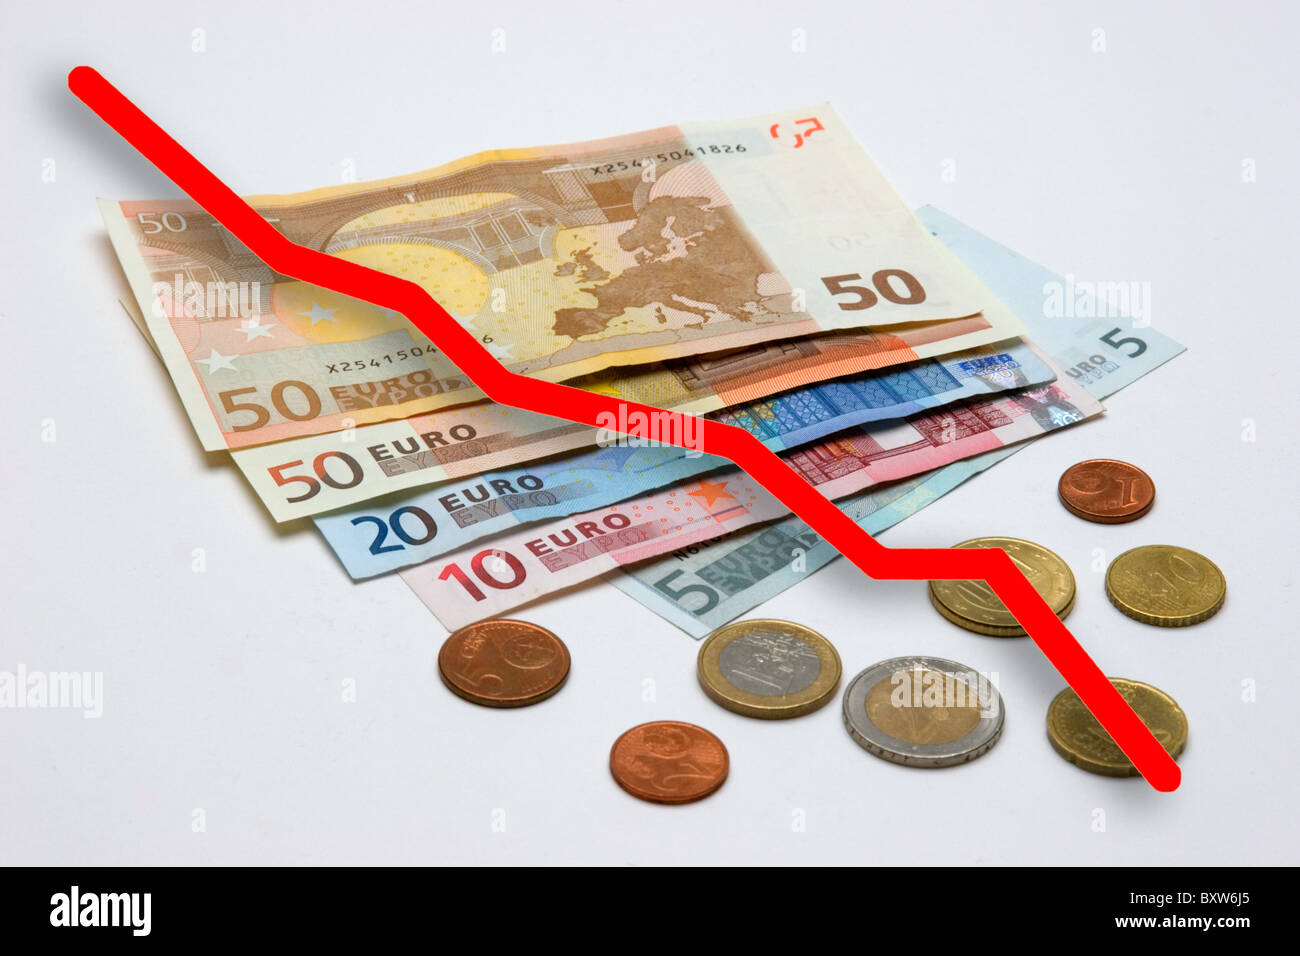 Crisis de la moneda EUR esperado colapso de la moneda única imagen símbolo de la muerte del Euro Foto de stock